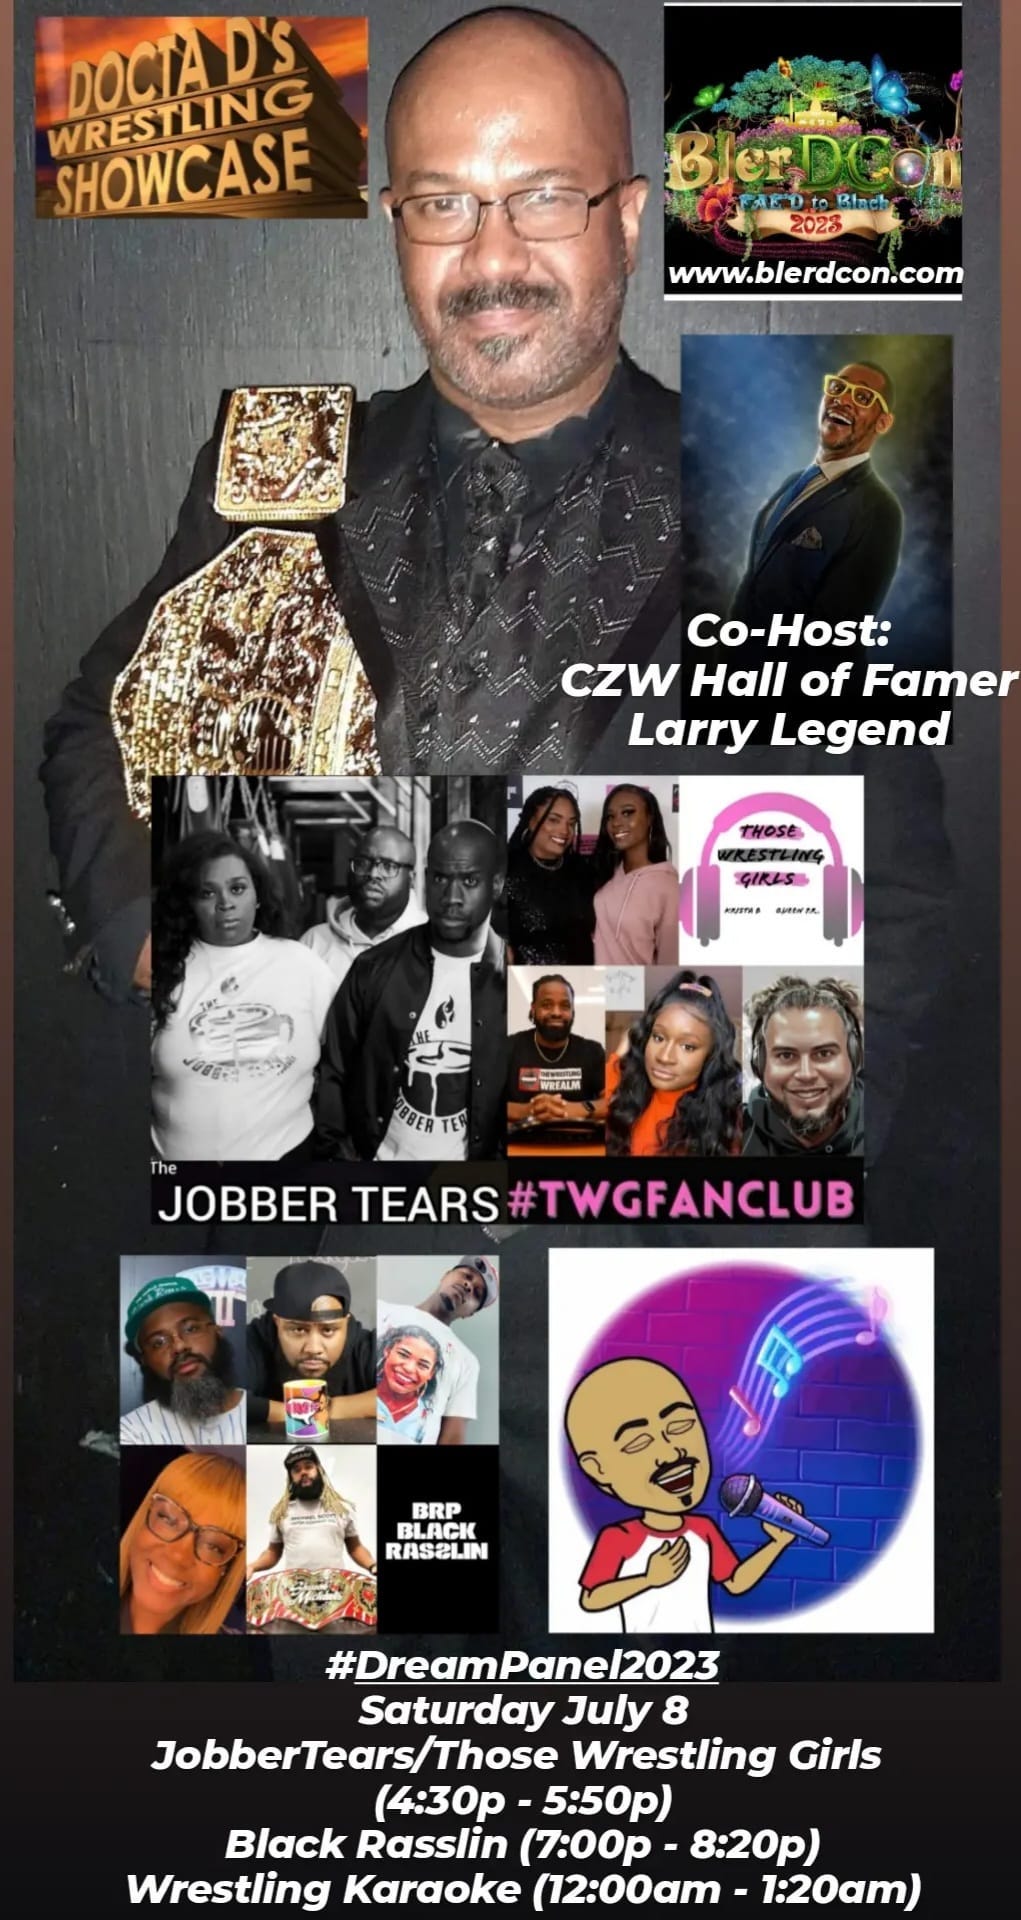 May be an image of 9 people and text that says 'DOCIAD'S WRESTLING SHOWCASE BlerDCon www.blerdcon.com Co-Host: CZW Hall of Famer Larry Legend COERTEC JOBBER TEARS #TWGFANCLUB BRP BLACK RASELIN #DreamPanel2023 Saturday July 8 JobberTears/Those Wrestling Girls (4:30p 5:50p) Black Rasslin (7:00p- -8:20p) Wrestling Karaoke (12:00am 1:20am)'